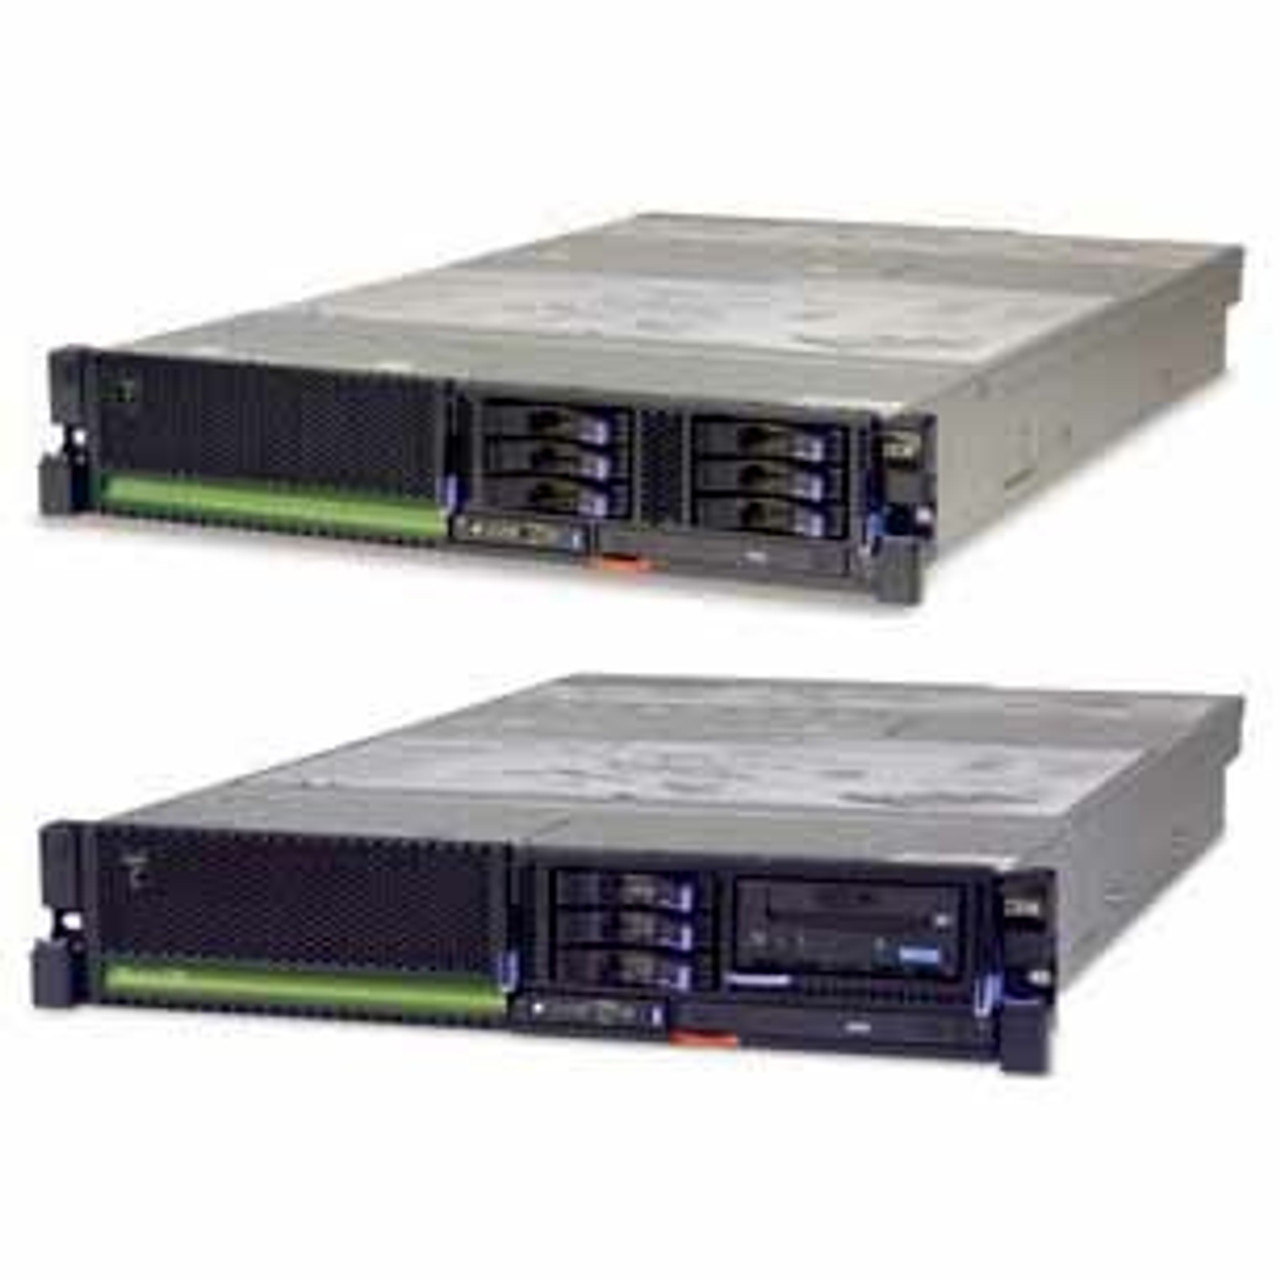 IBM 8231-E1D iSeries Servers